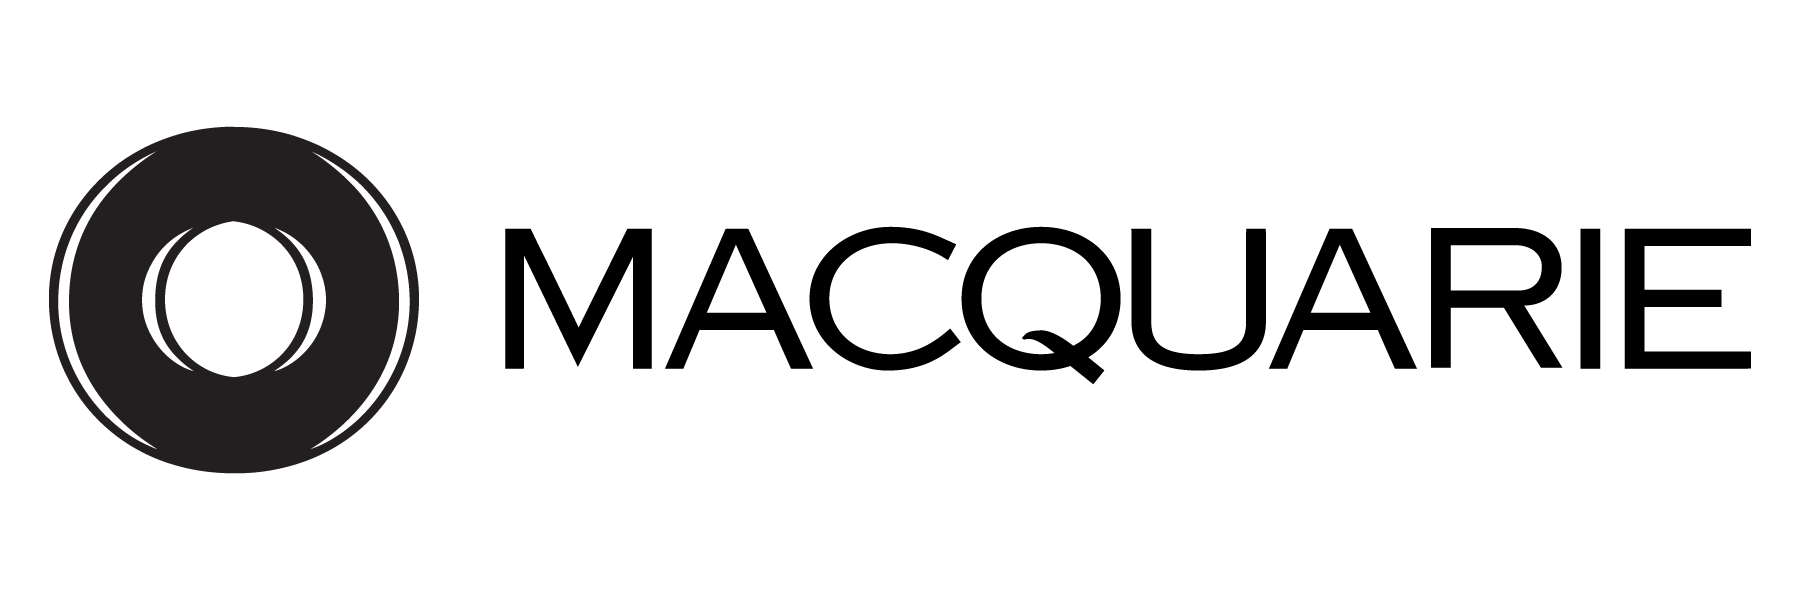 Macquarie_Bank_logo.png